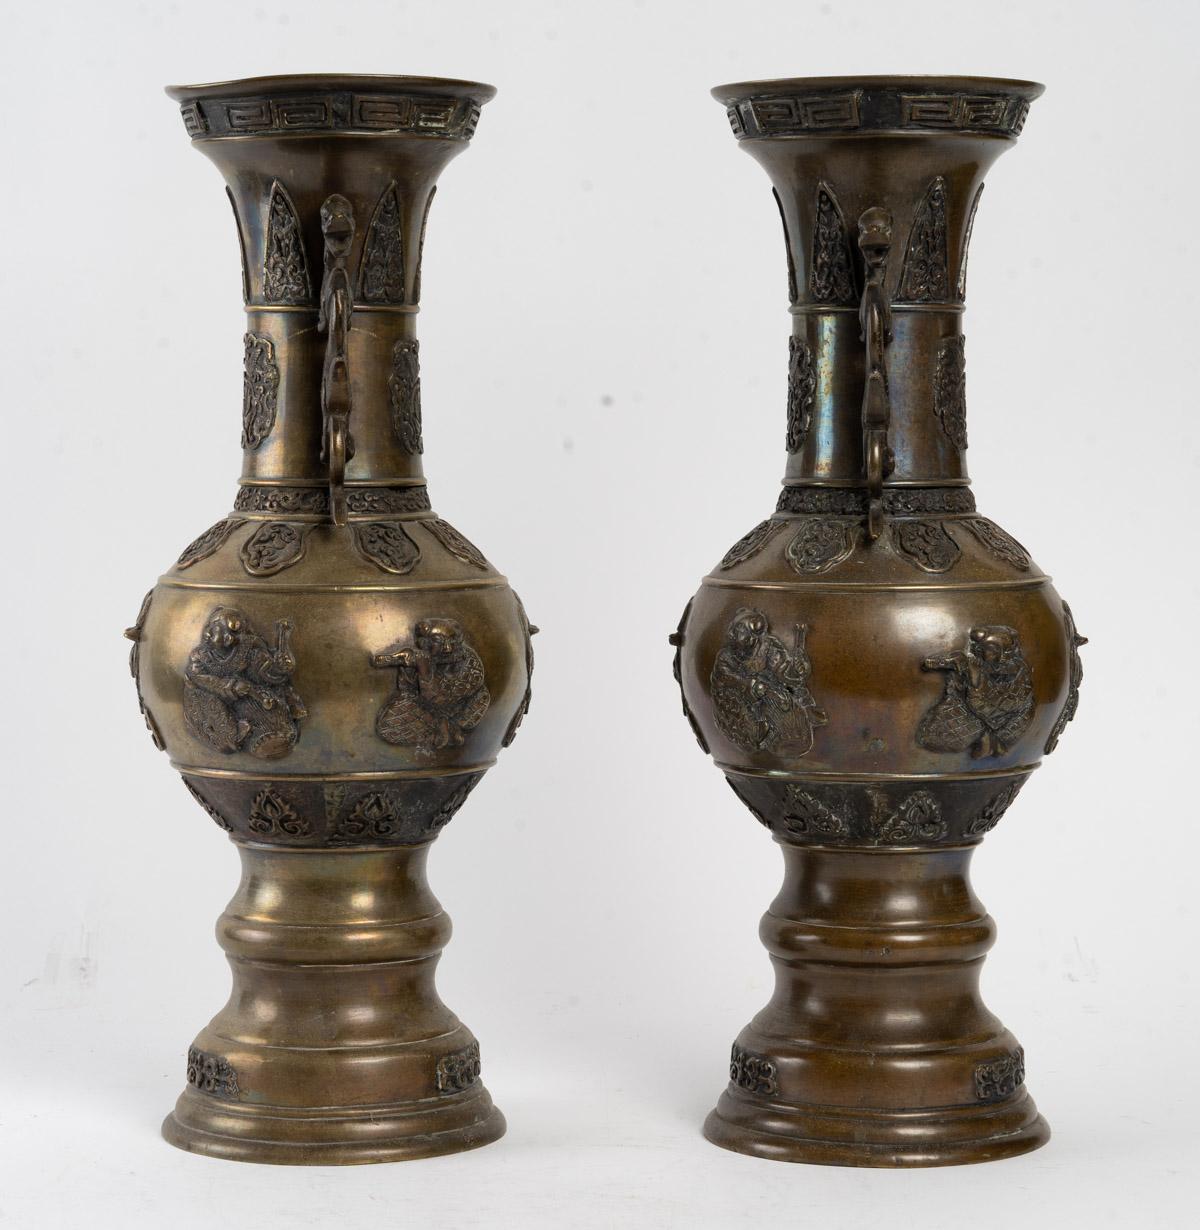 Pair of bronze vases with handles dragon shaped, 1900
Measures: H 42 cm, W 15 cm, D 16 cm.